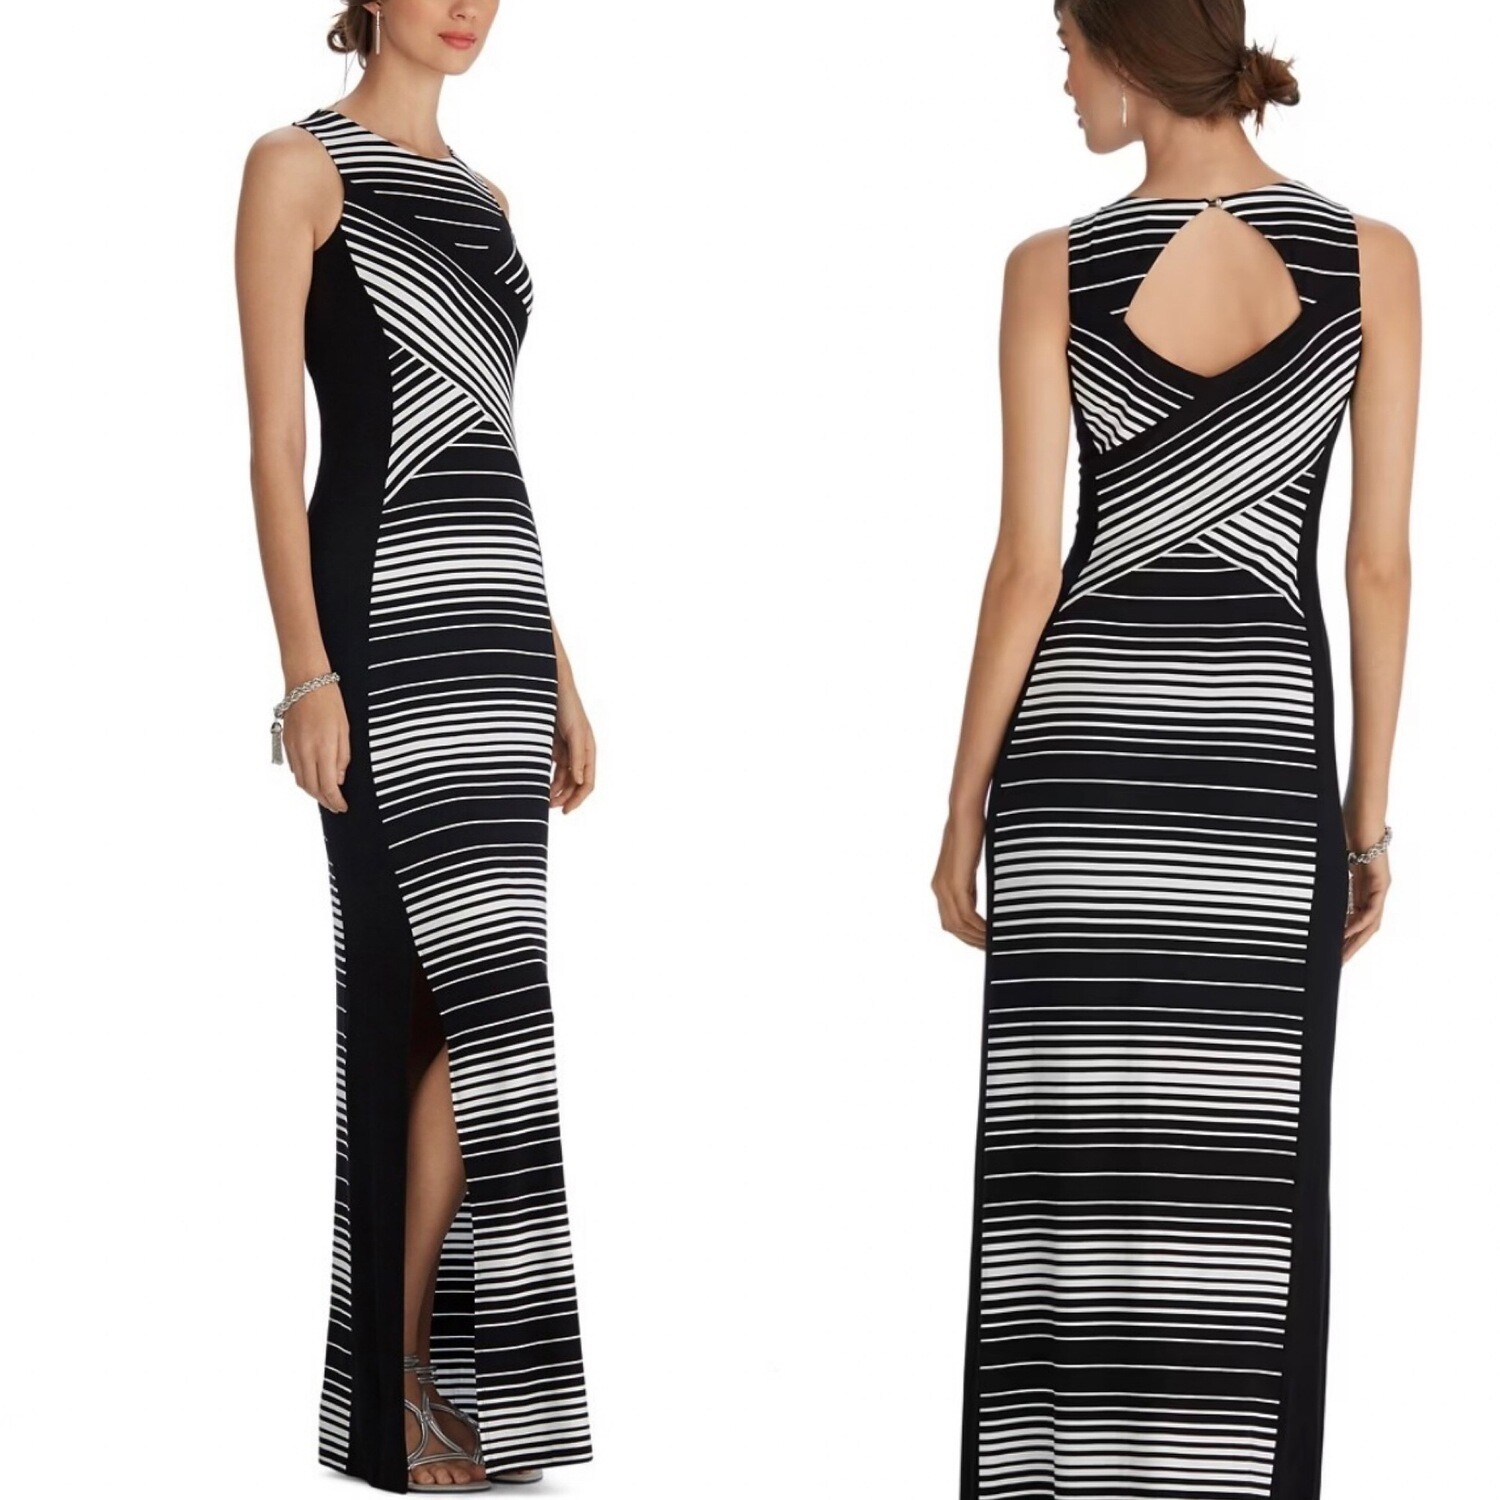 New White House Black Market Sleeveless Cross Stripe Maxi Dress sz L